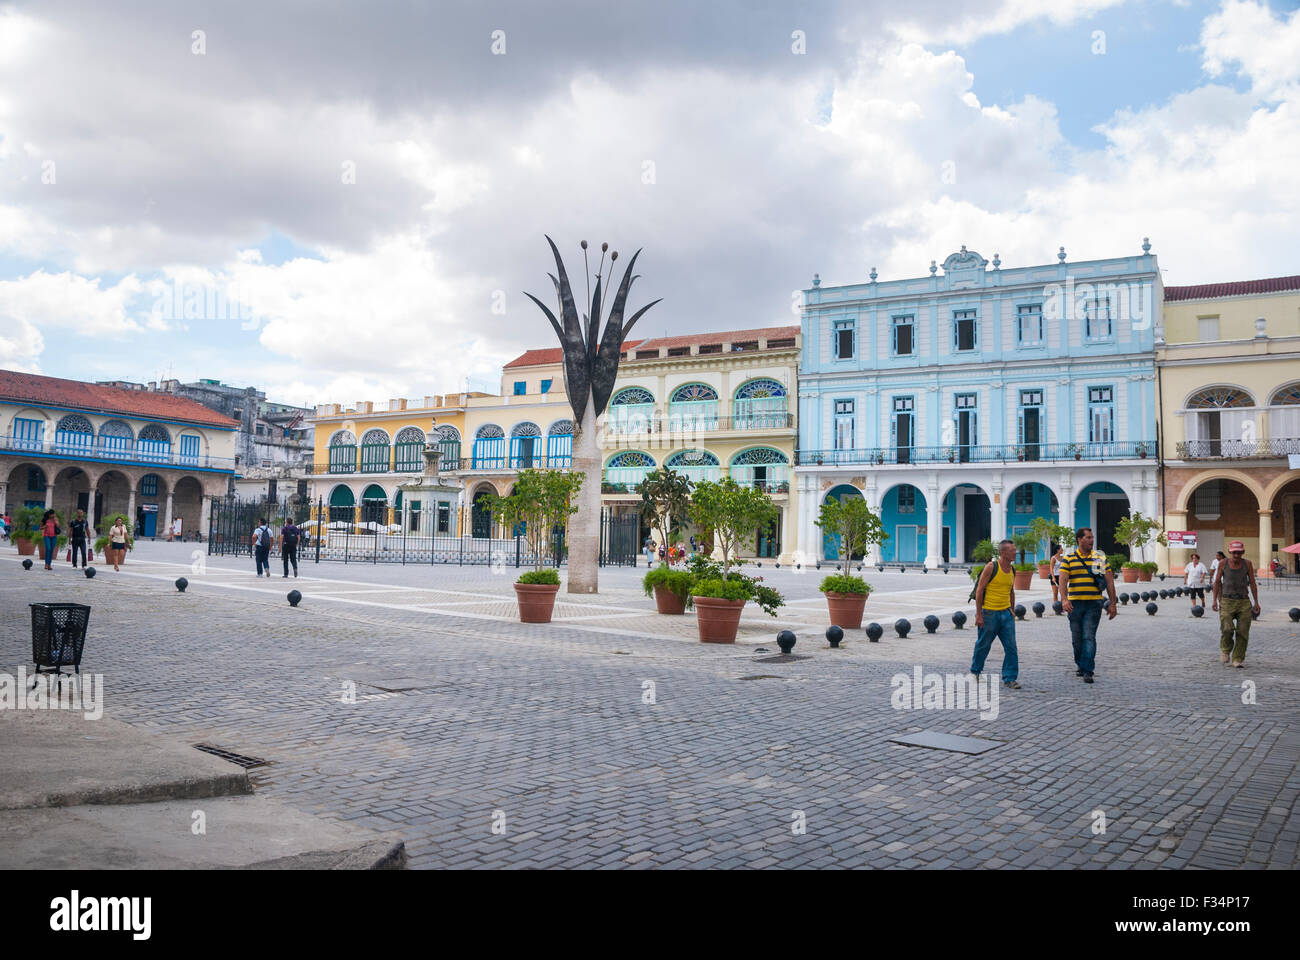 The Plaza Vieja of Havana (old Havana square) is a popular tourist stop in central Havana Cuba Stock Photo